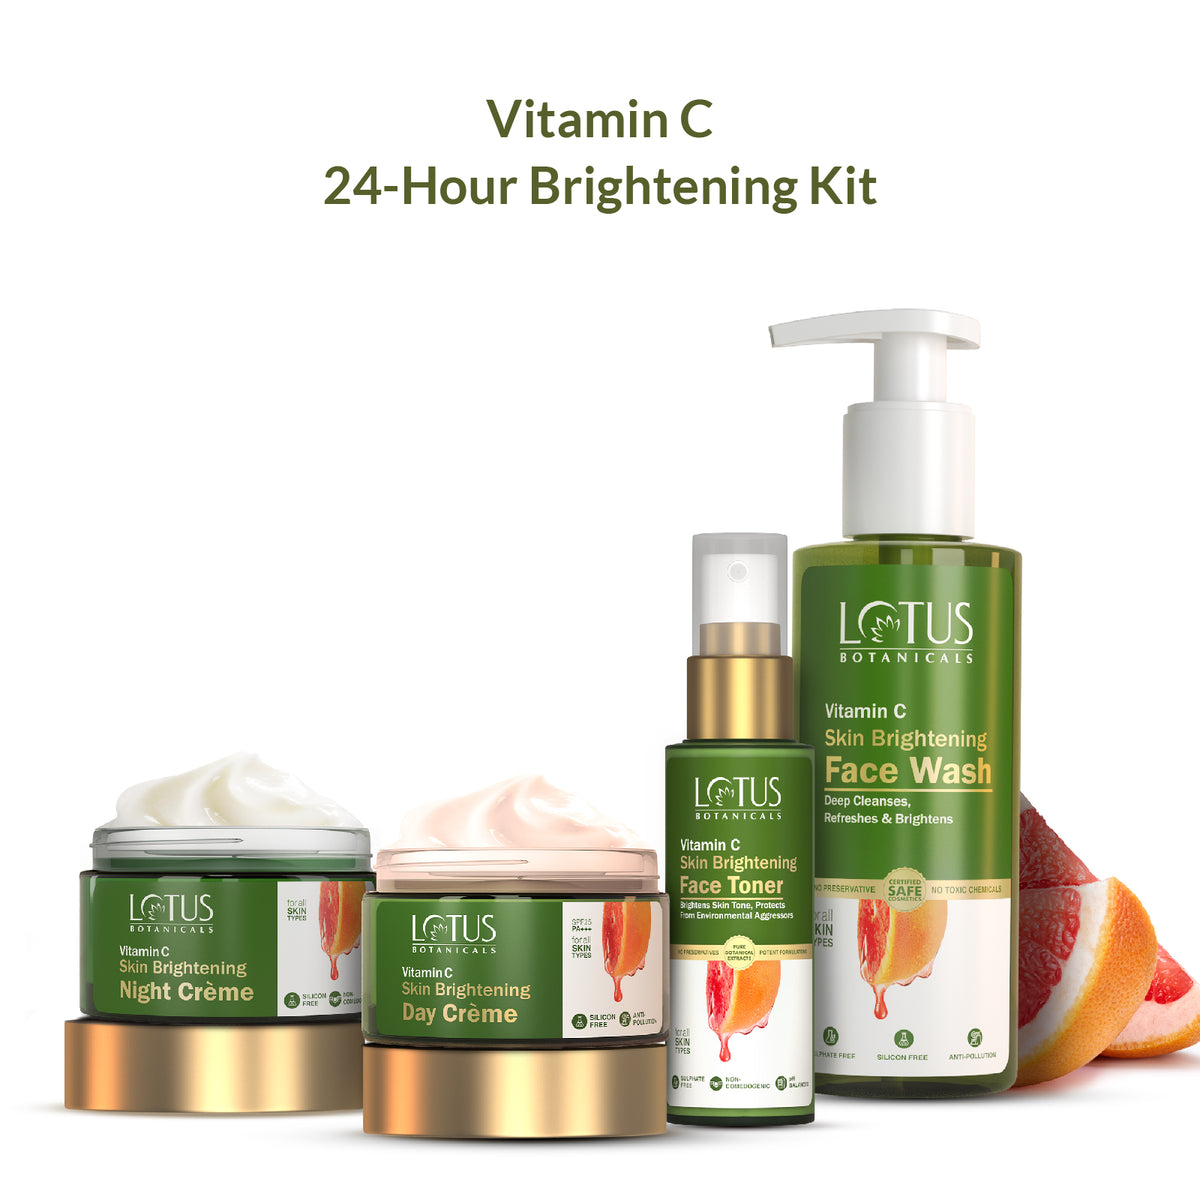 Lotus Botanicals Vitamin C 24-Hour Brightening Kit